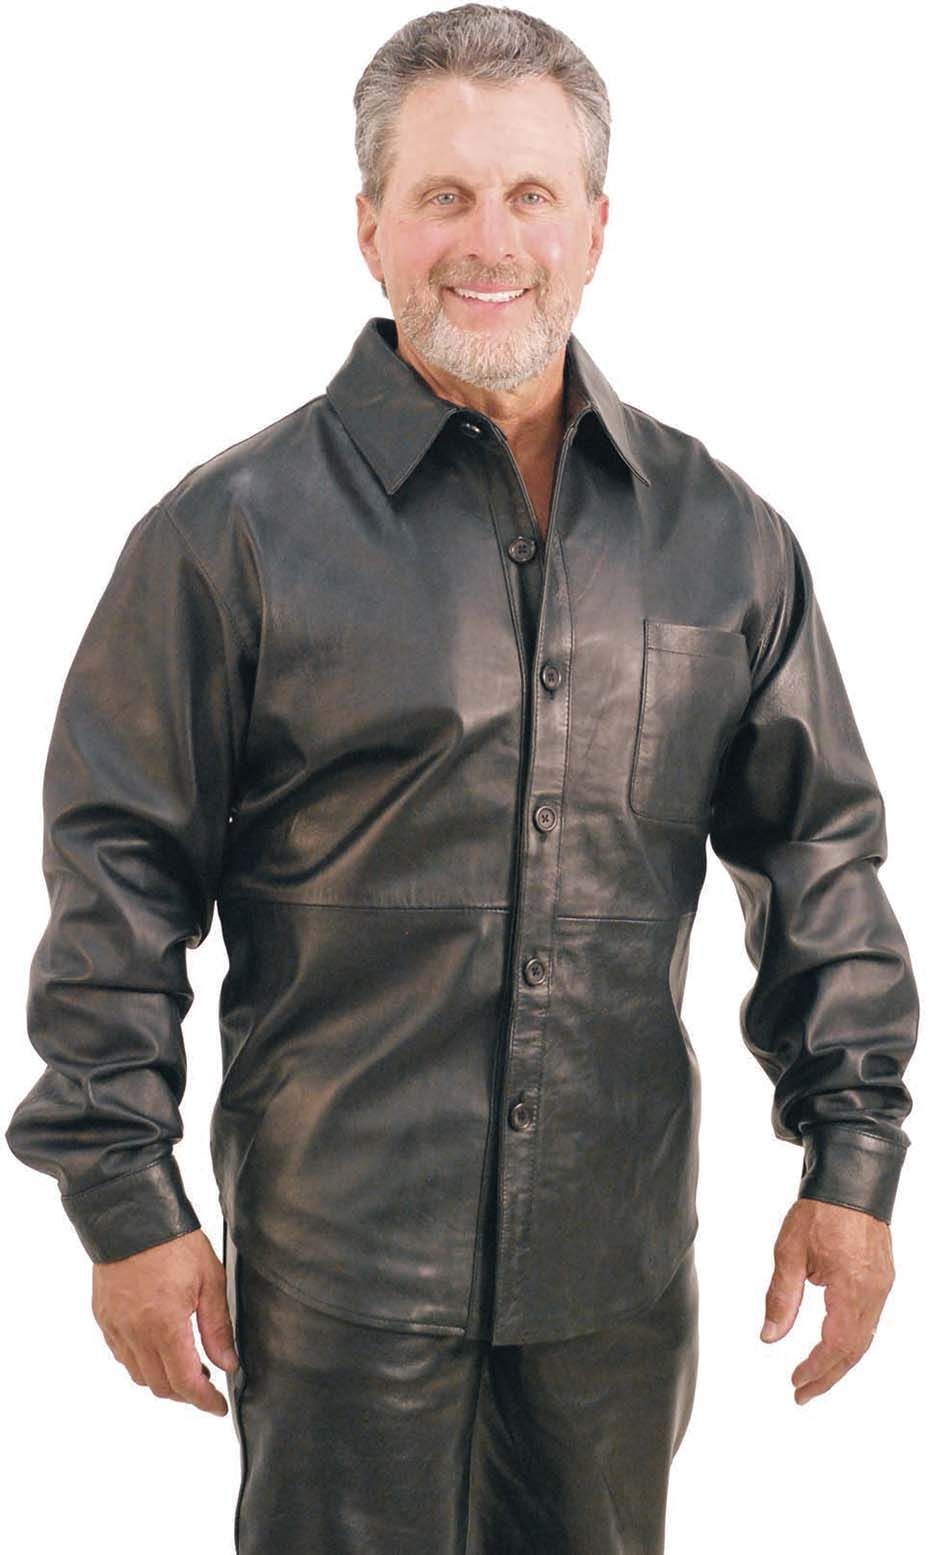 Biker wearing black leather button up shirt